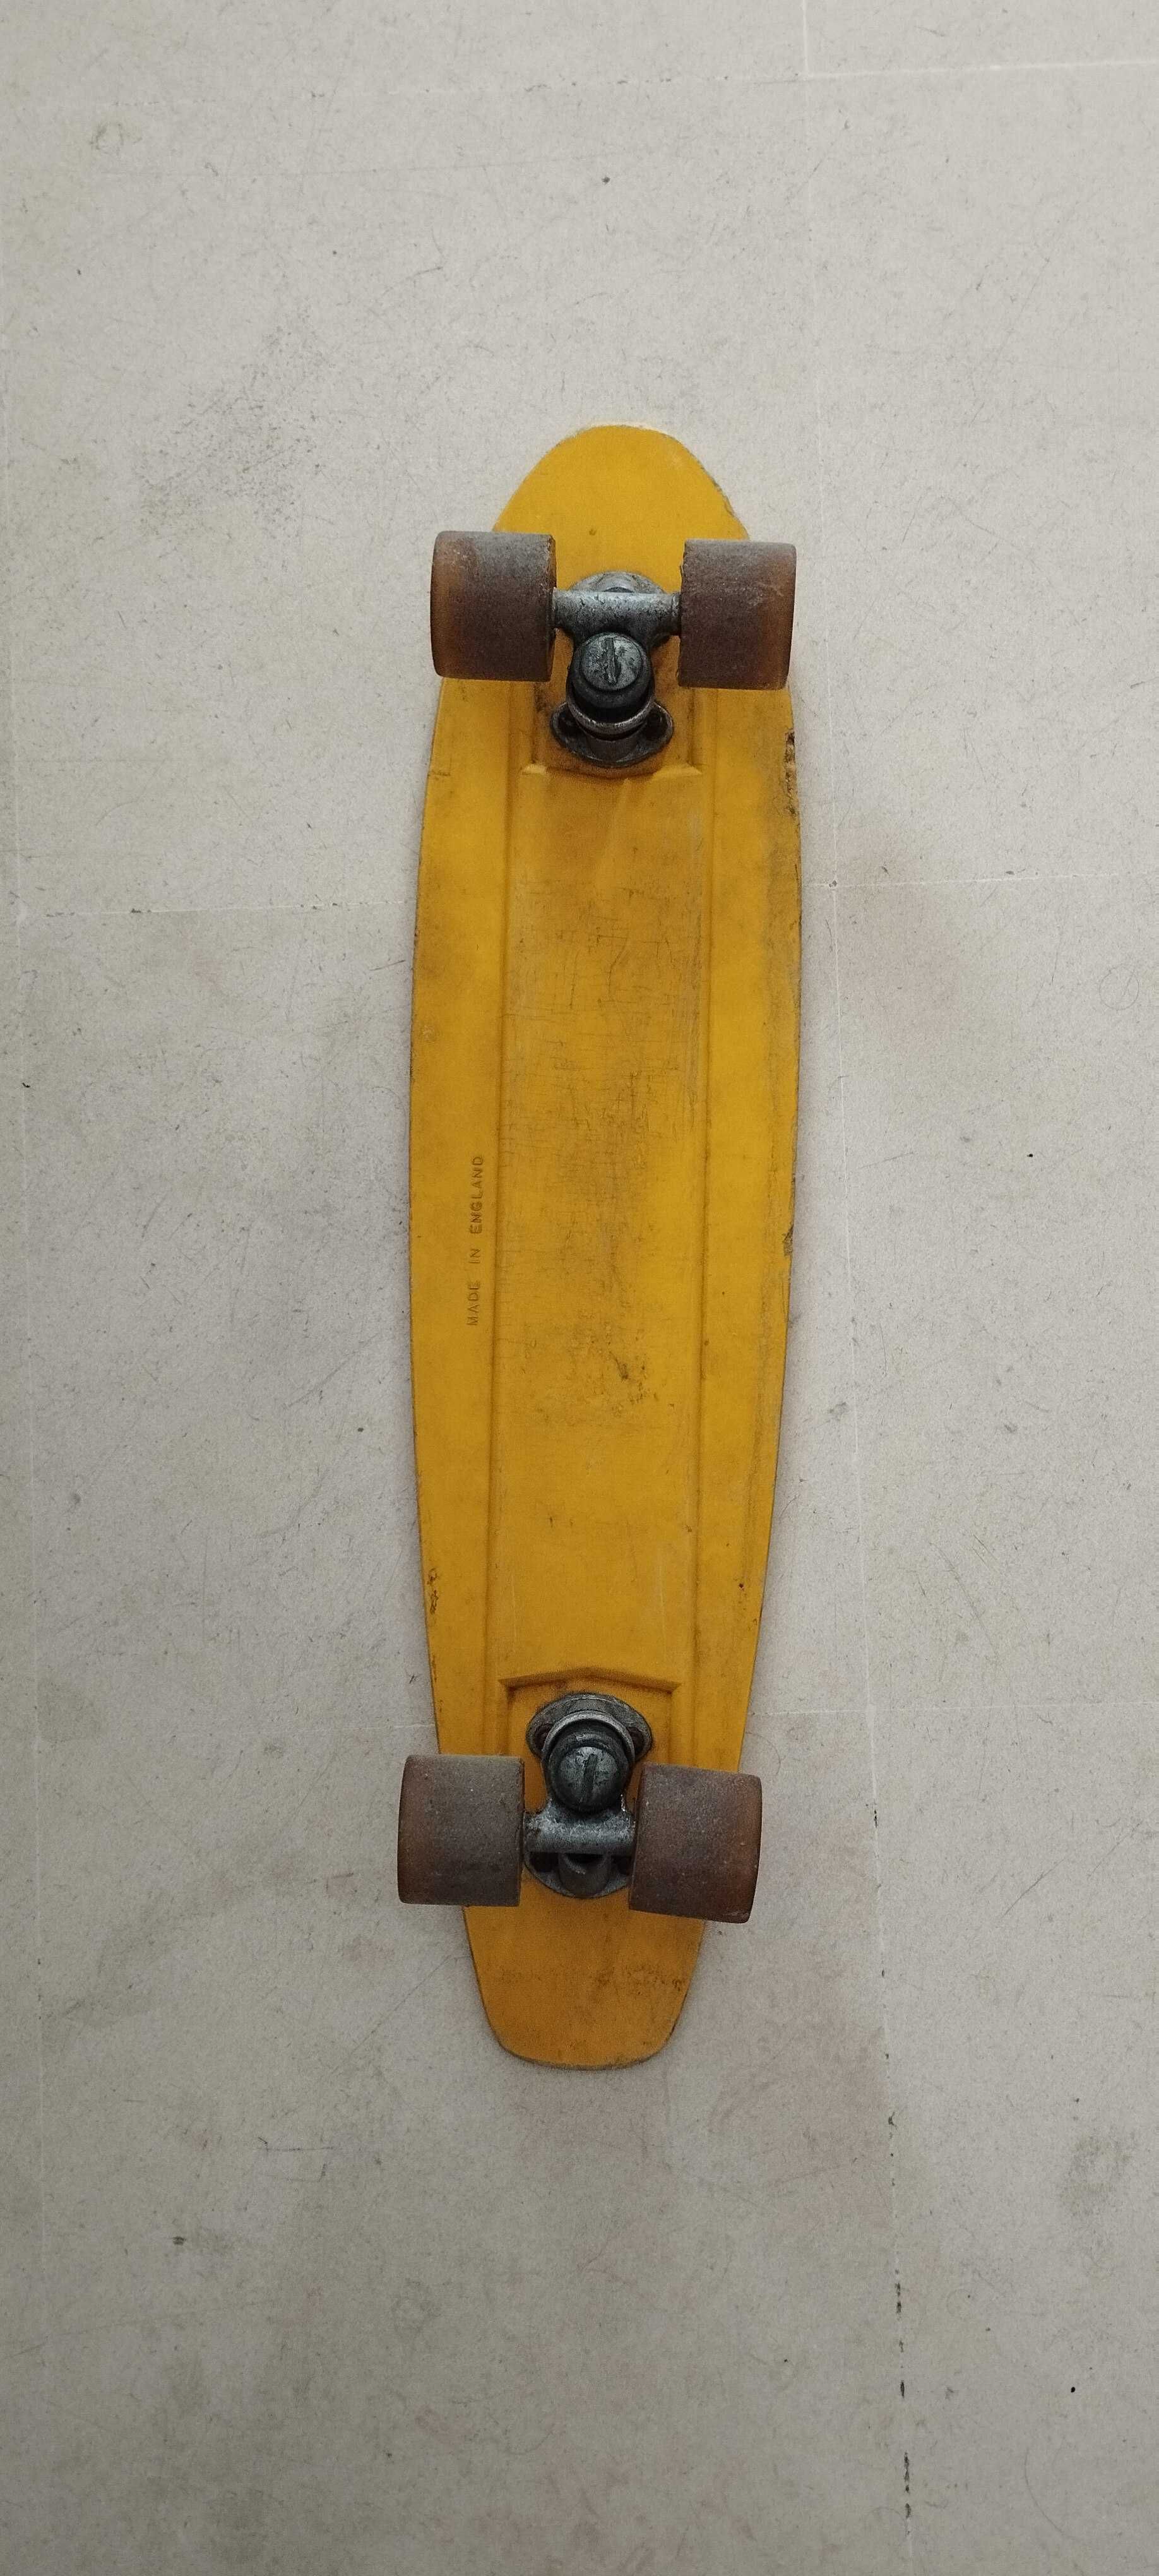 Rare Vintage Yellow Skuda Skateboard Original Trucks And Wheels 1970s